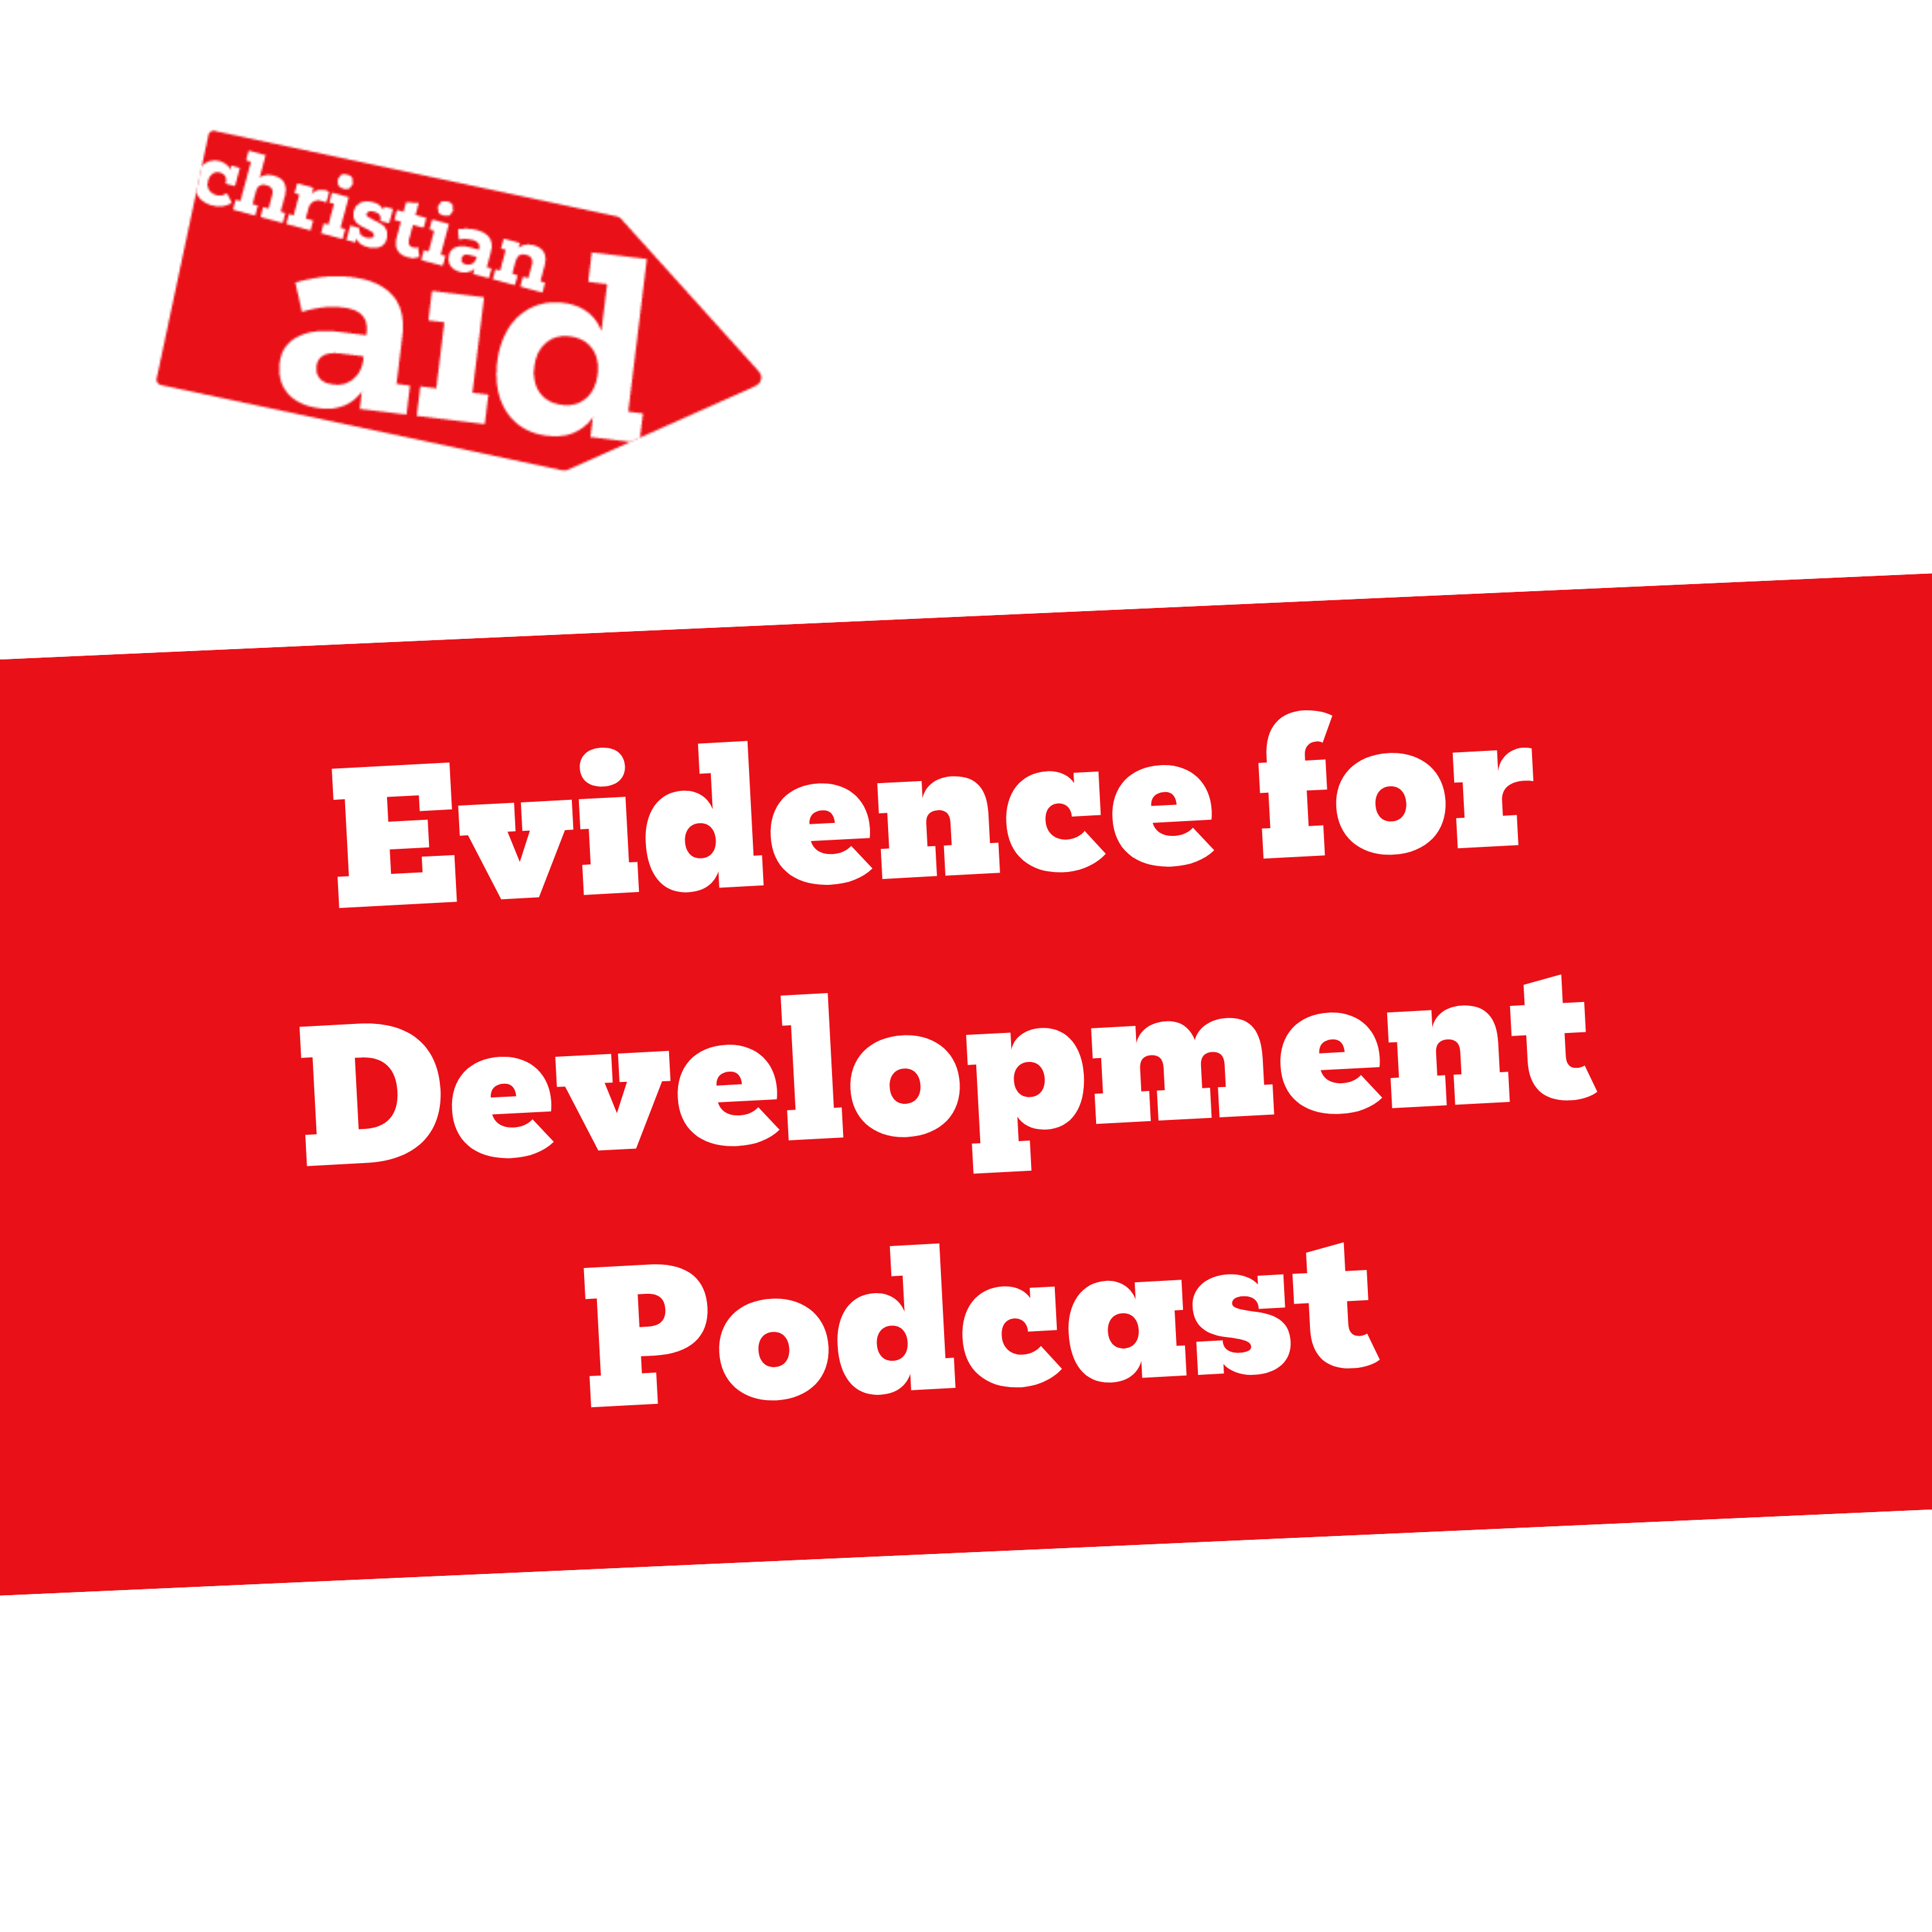 Christian Aid podcast artwork